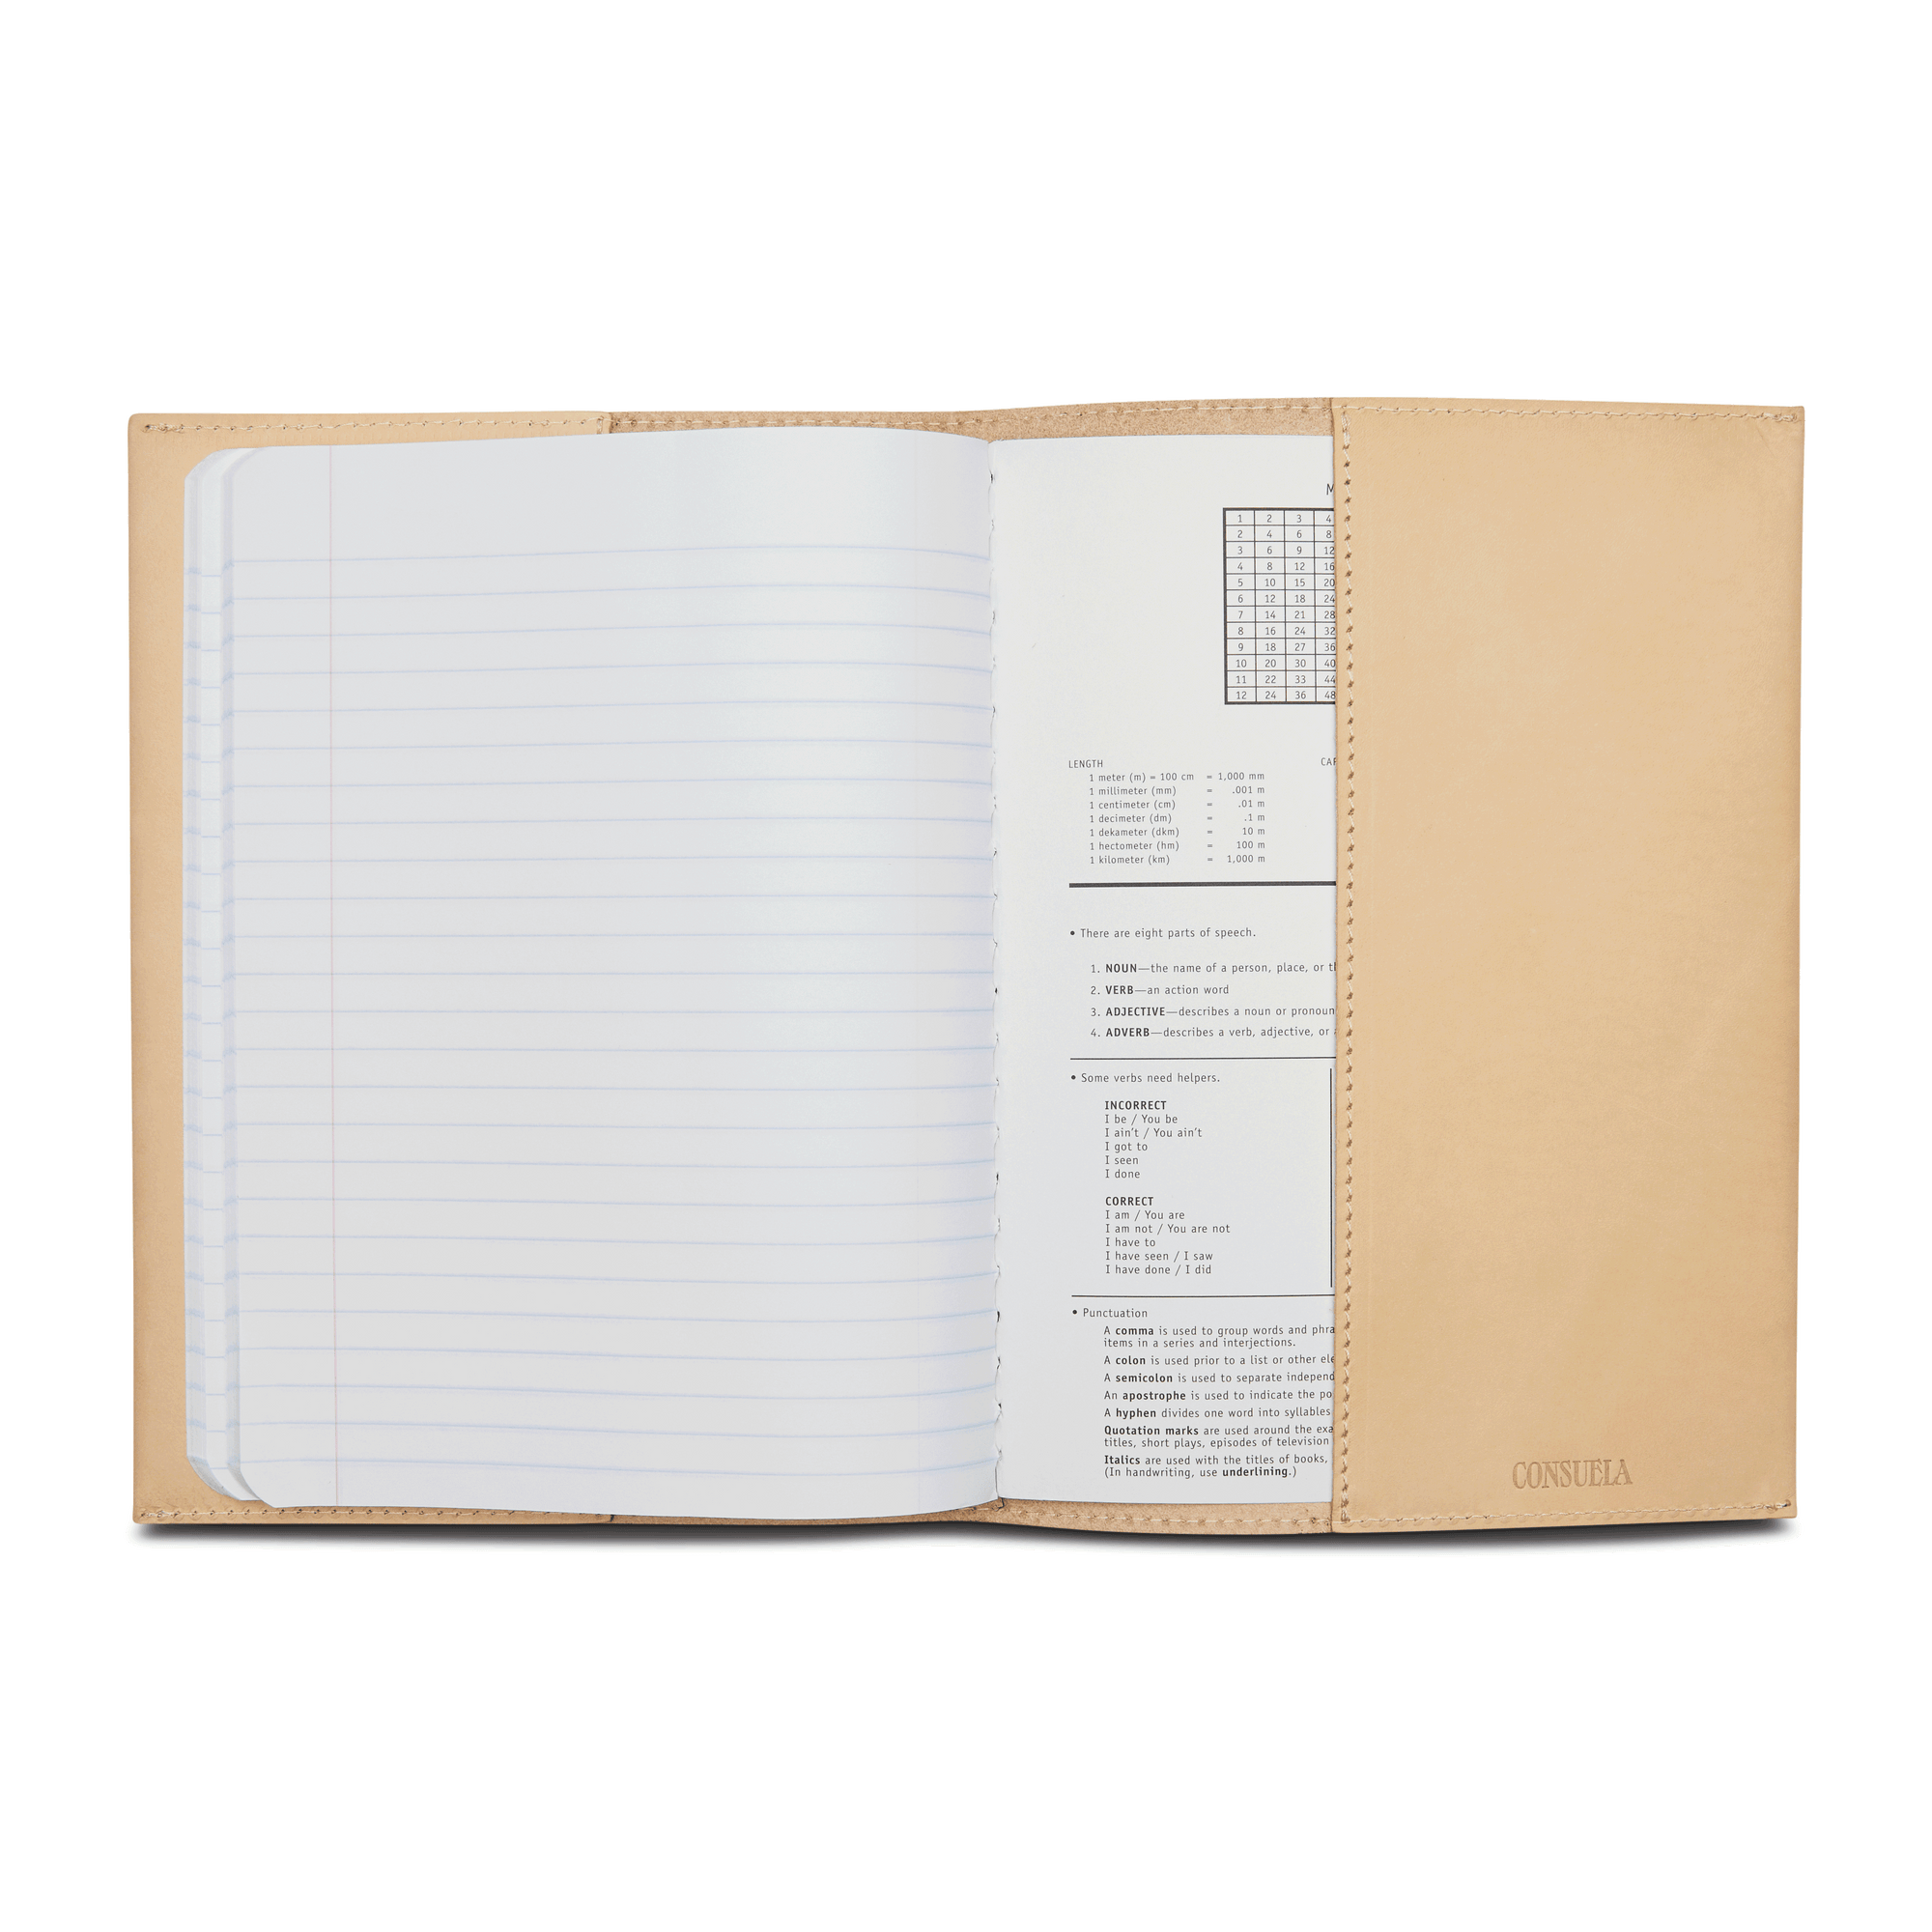 Consuela Diego Notebook